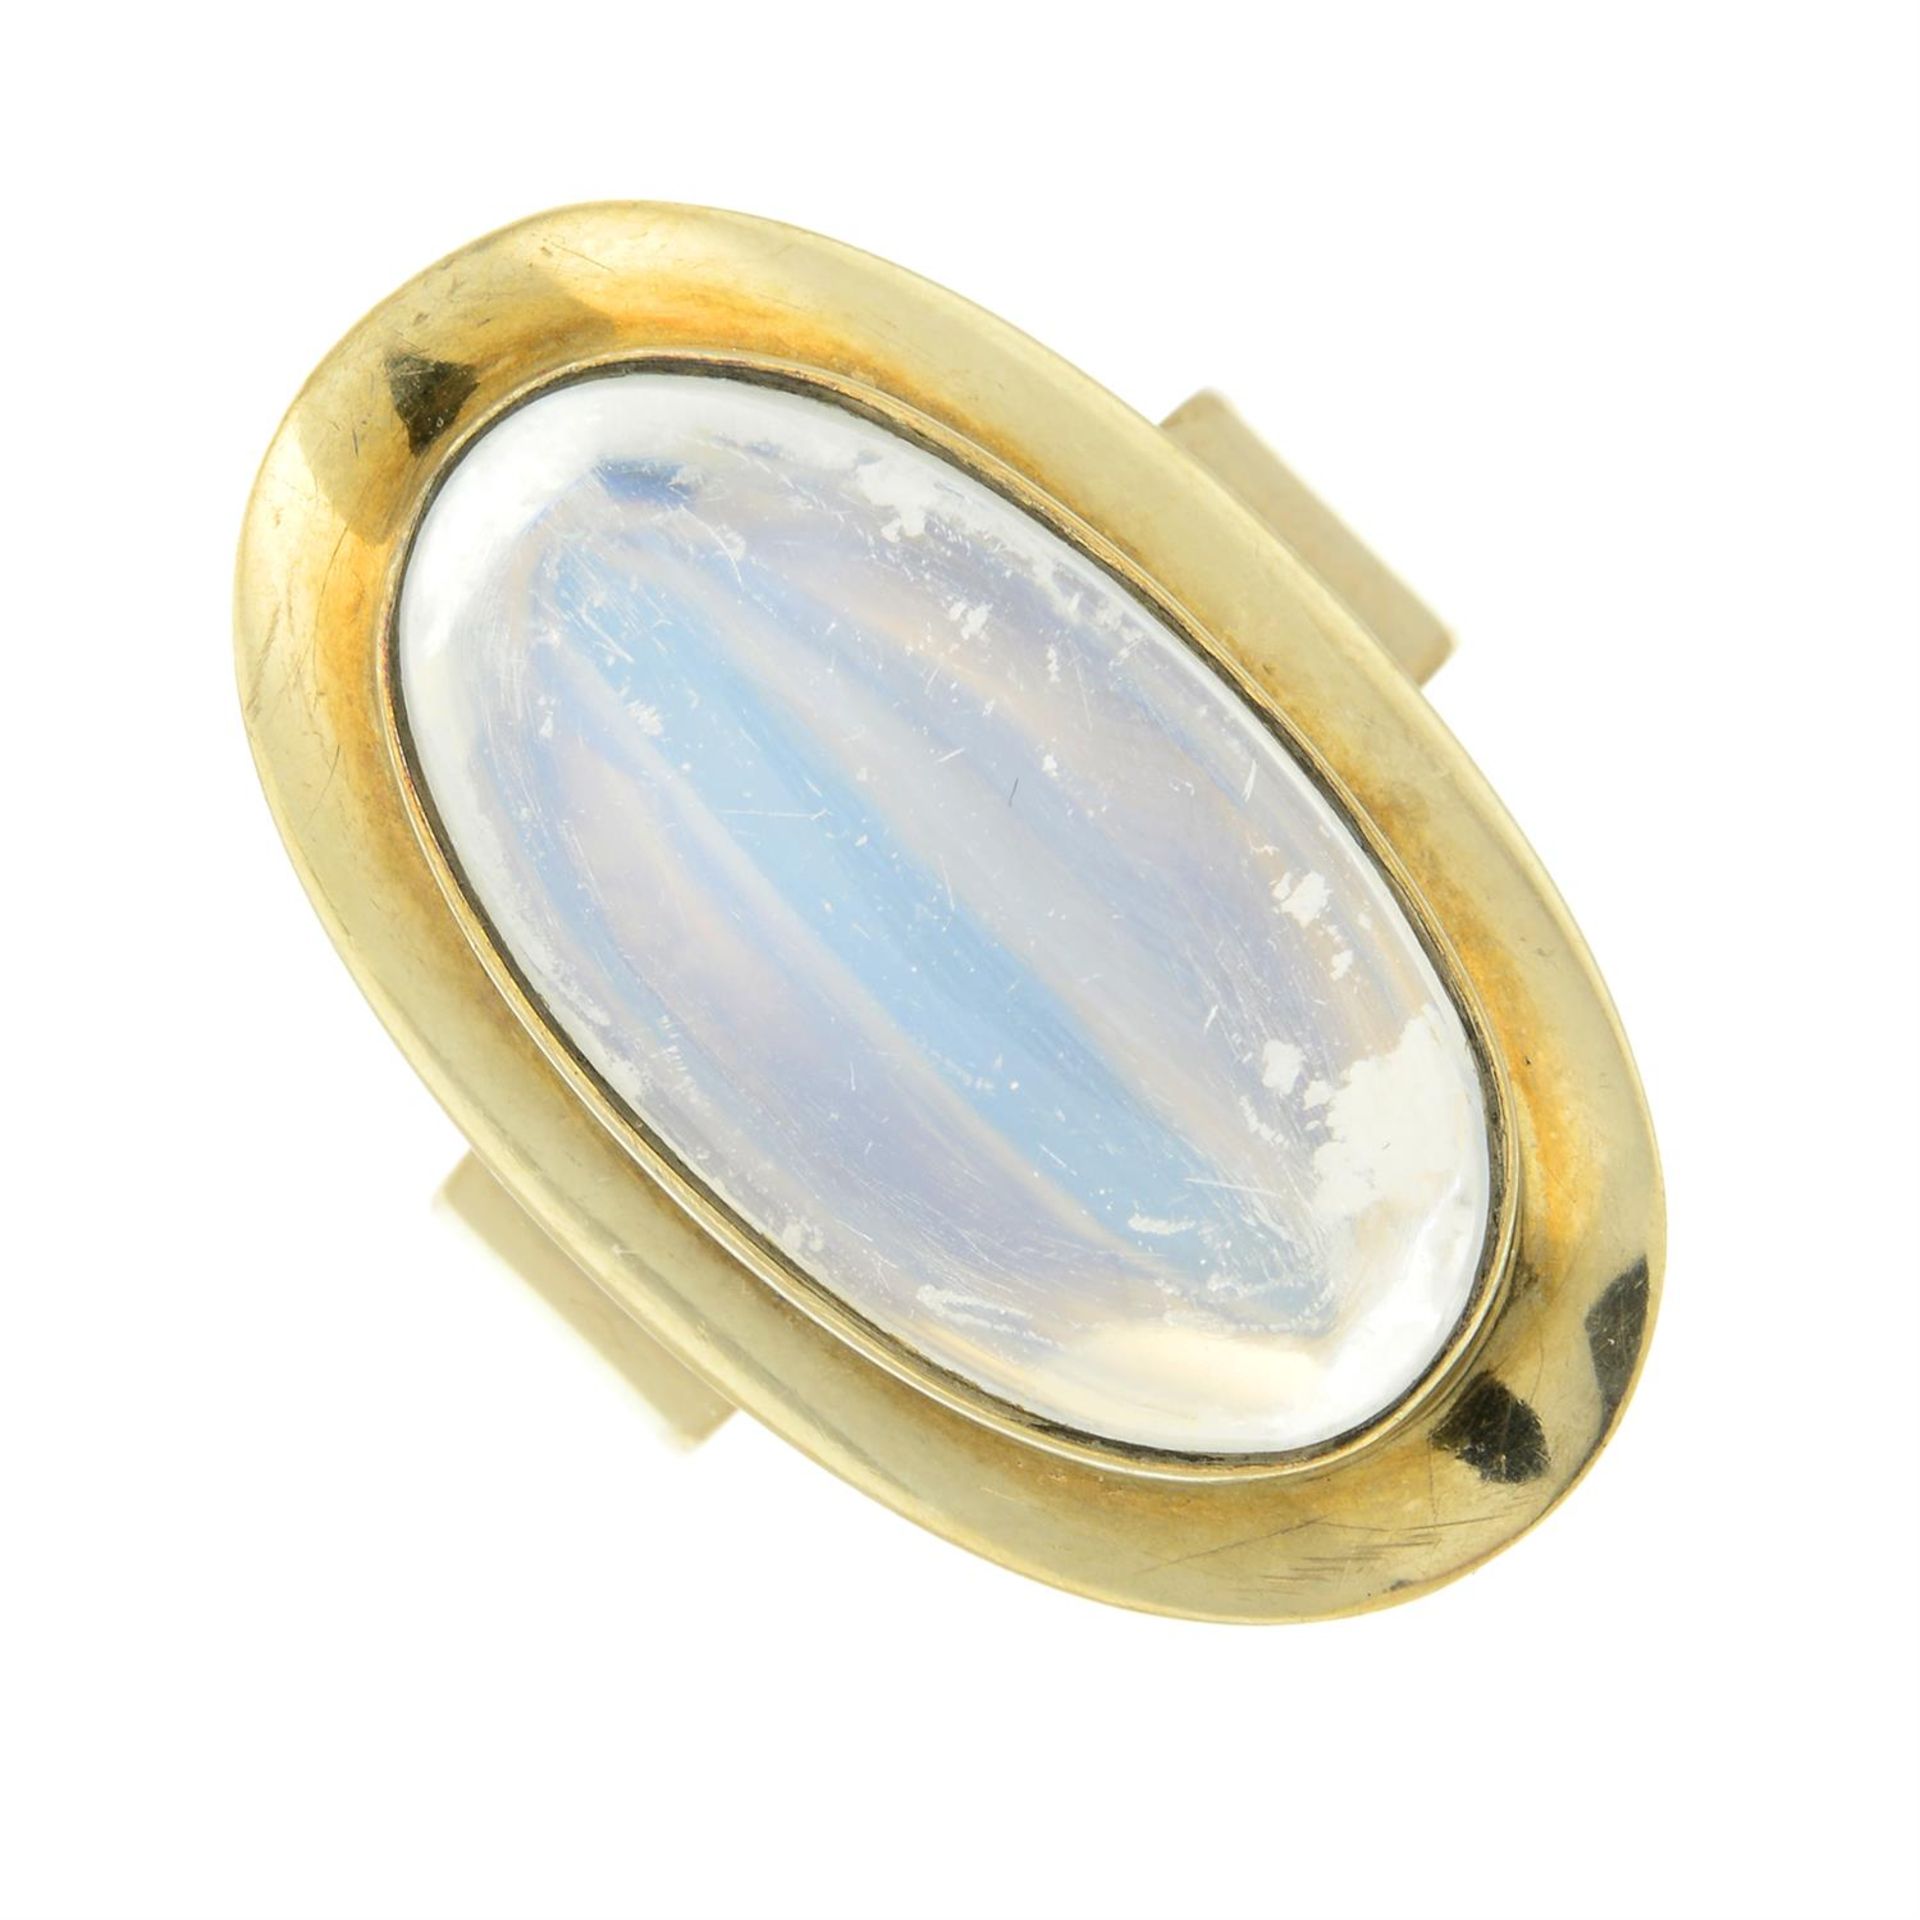 A mid 20th century moonstone single-stone dress ring.